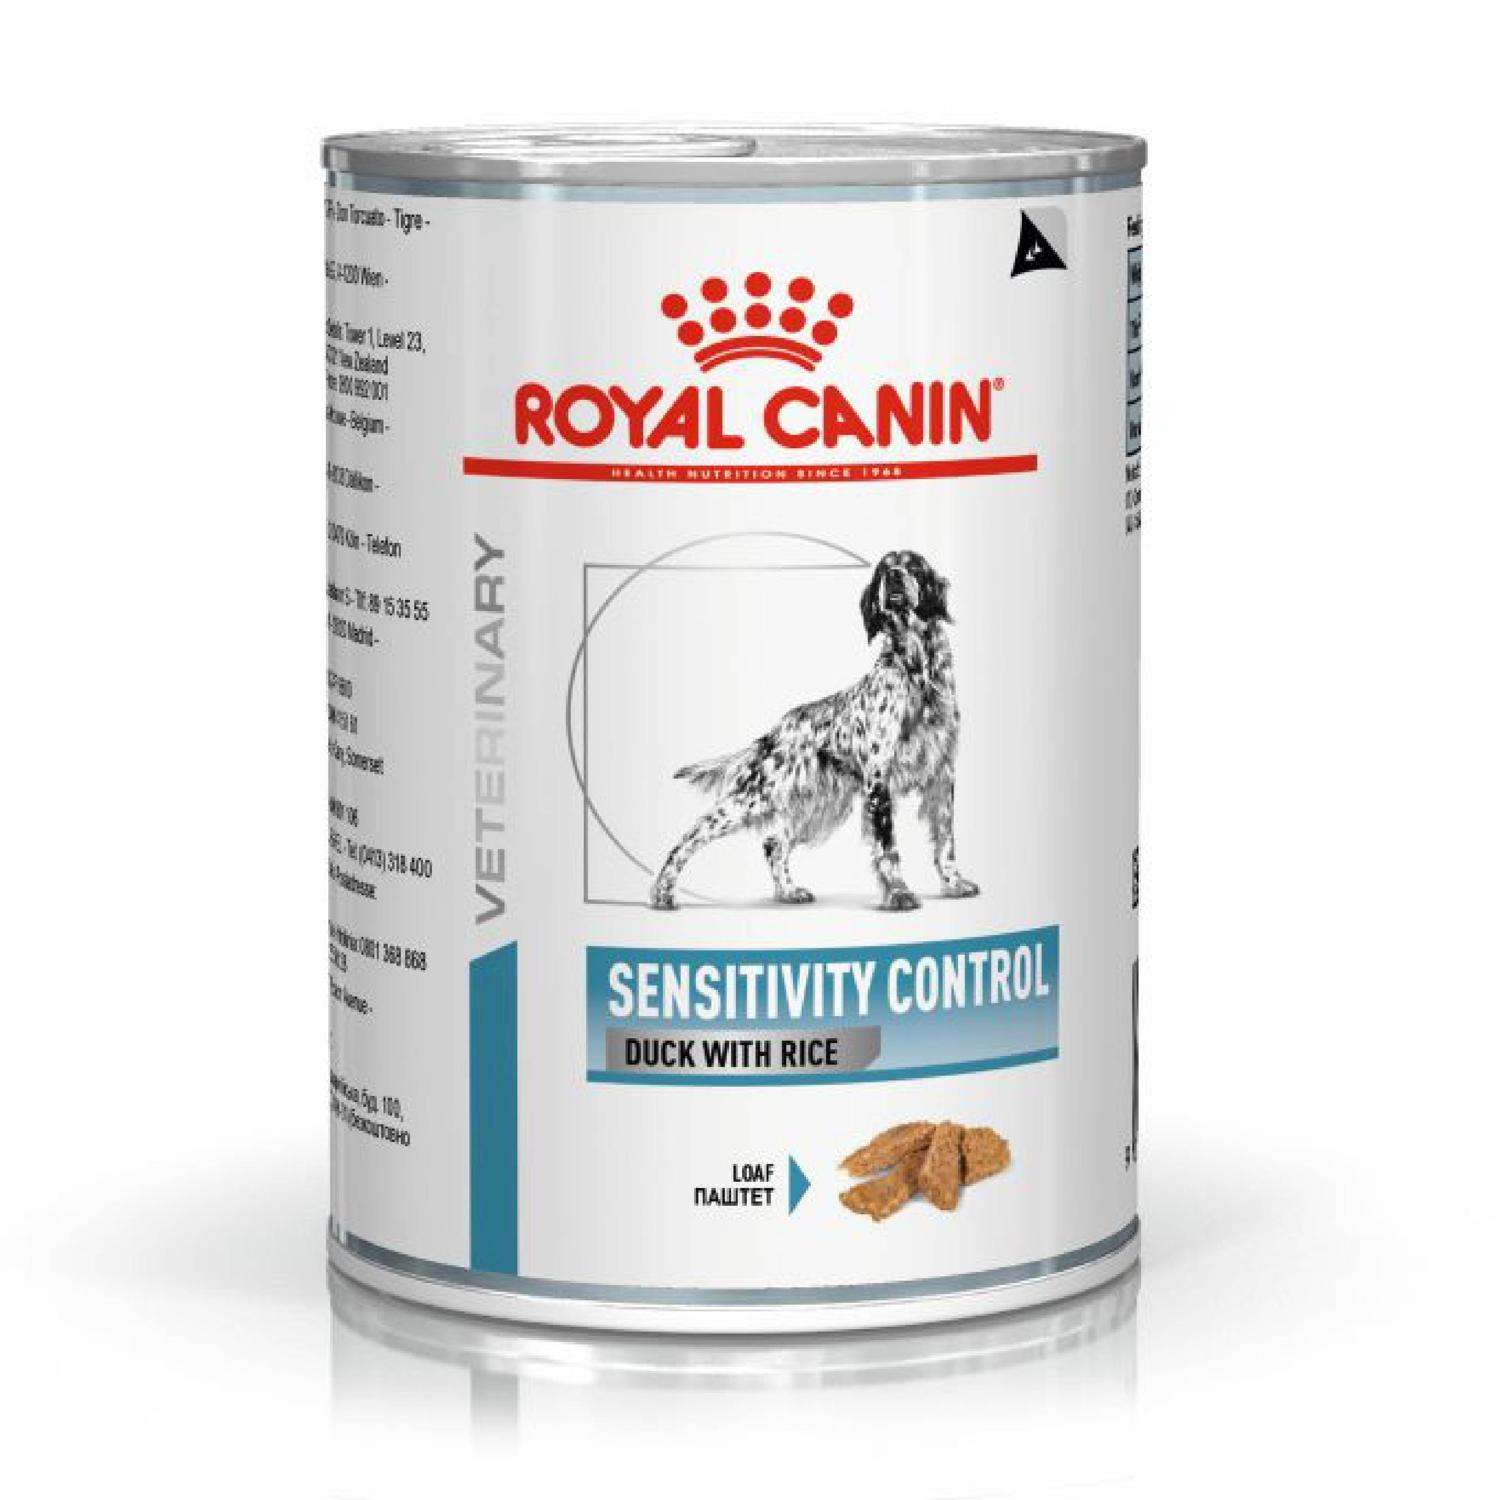 Влажный корм для собак royal canin. Royal Canin Gastrointestinal для собак Low fat. Royal Canin Gastro intestinal для собак. Влажный Gastrointestinal Low fat Роял Канин. Роял Канин гастро Интестинал Лоу фэт для собак сухой корм.